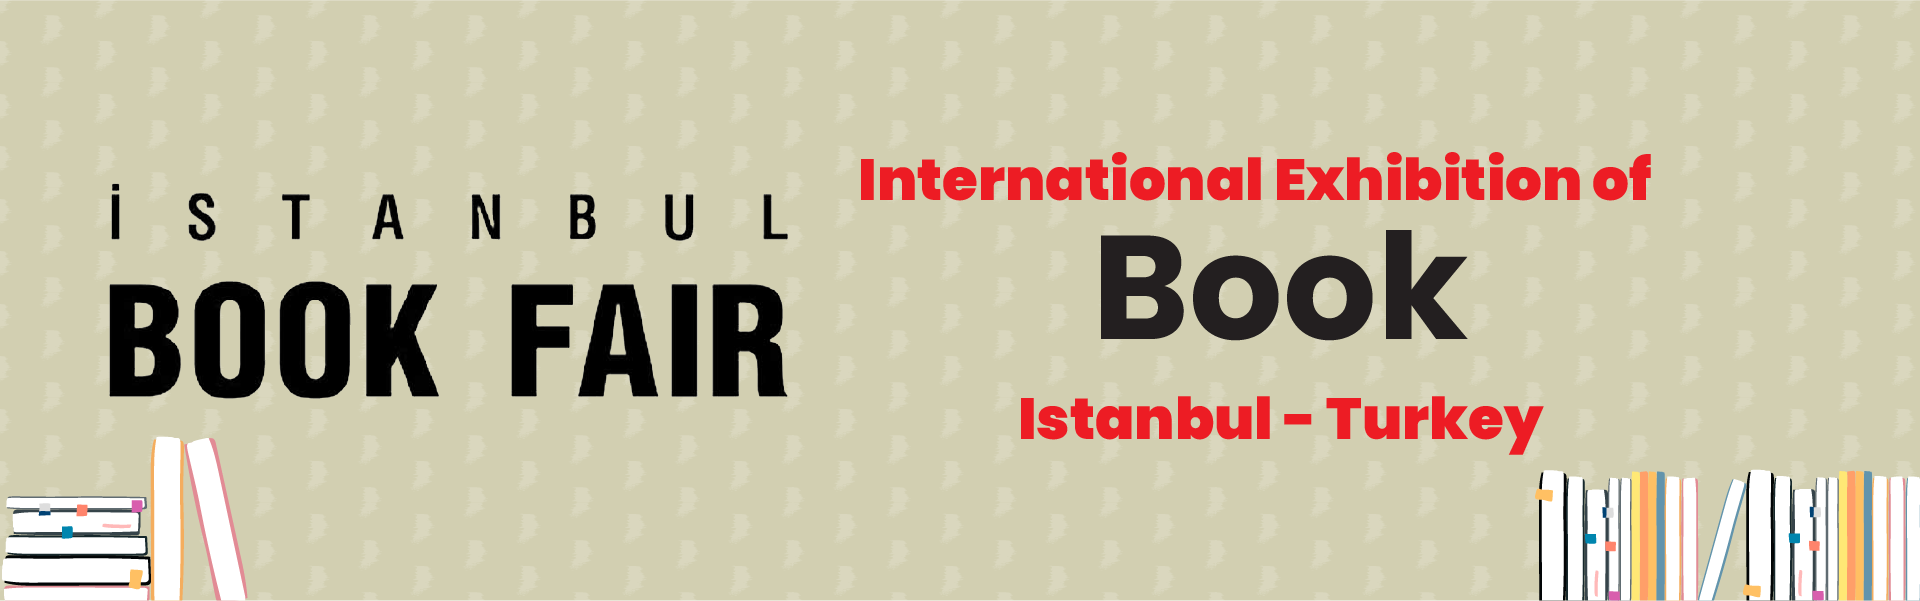 Book Fair Exhibition Istanbul Turkey